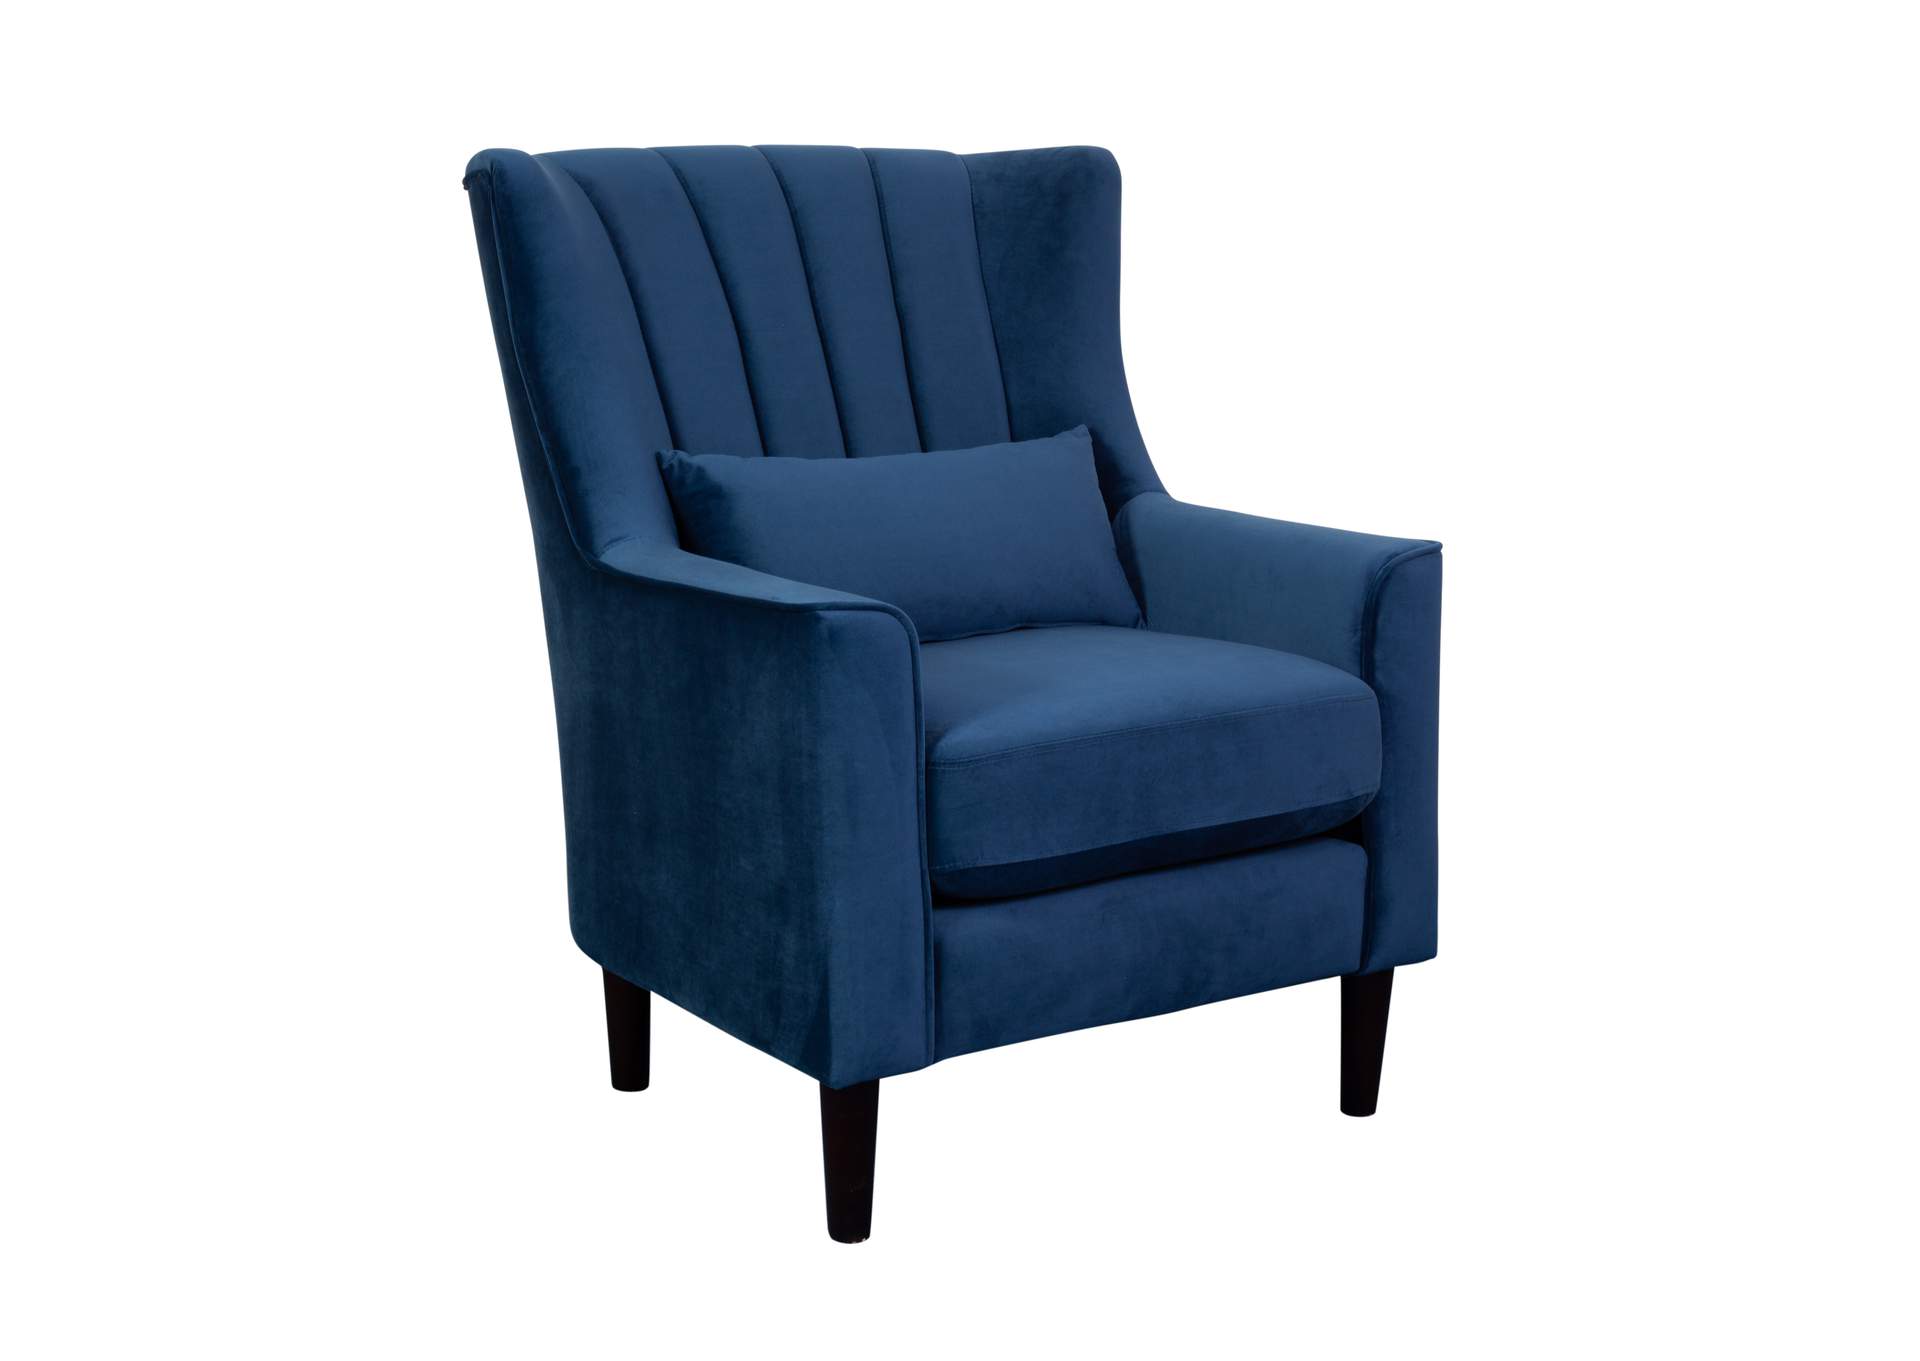 Kate Ac932 Blue Chair,Porter Designs